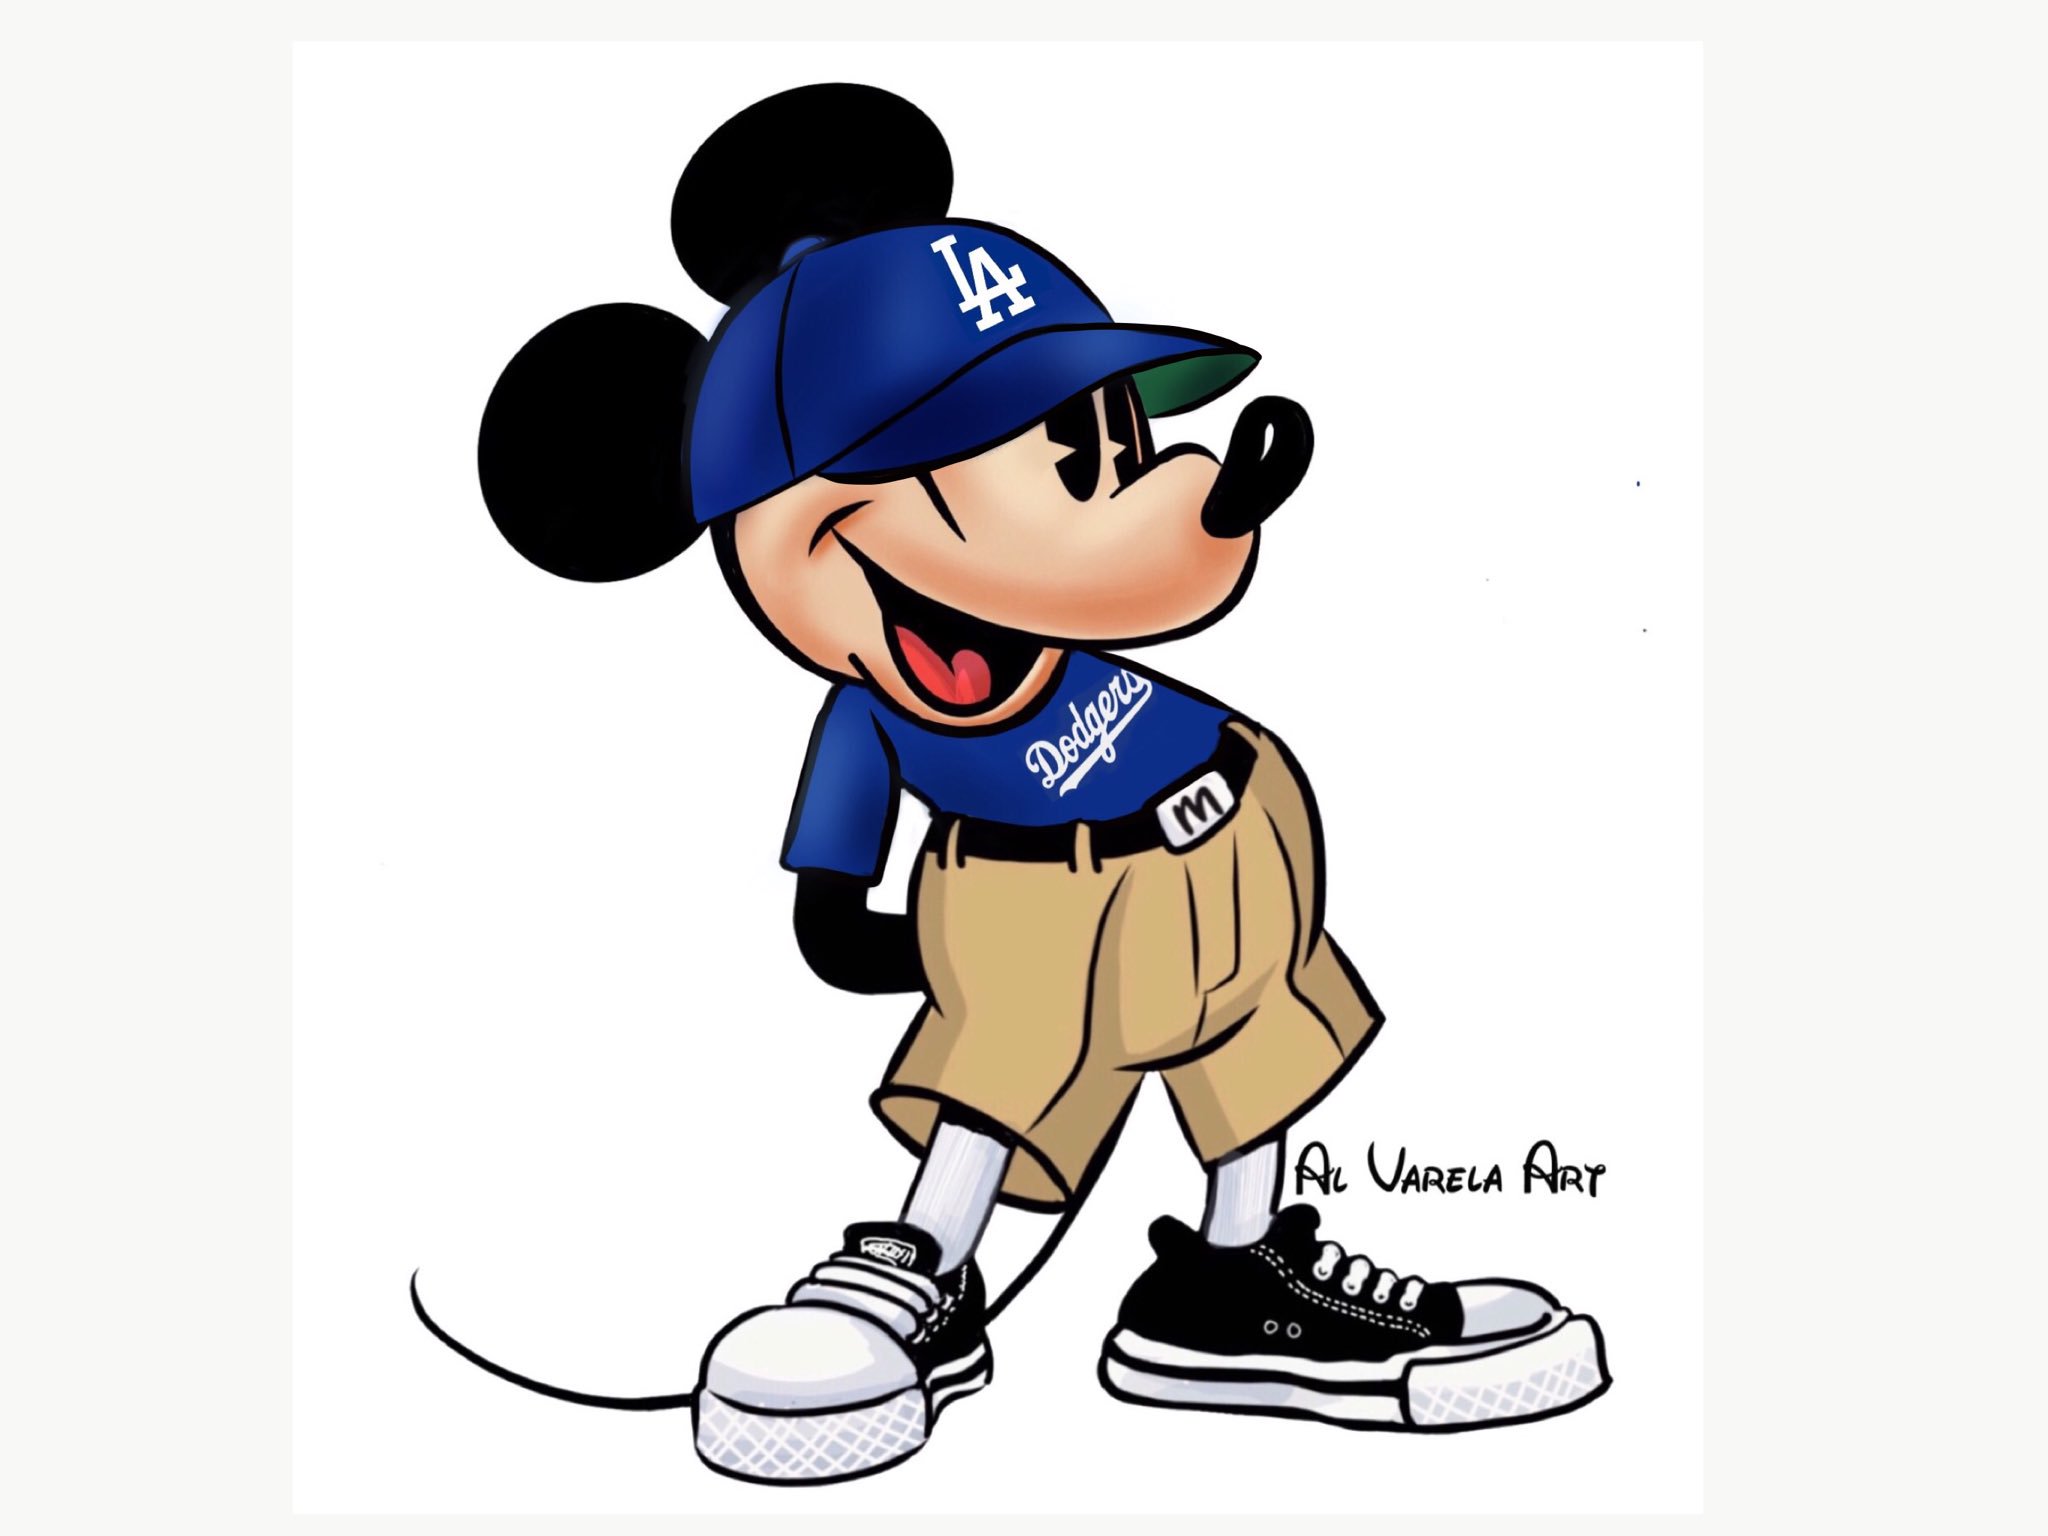 Al Varela on X: Great series @Dodgers #Dodgers #MickeyMouse